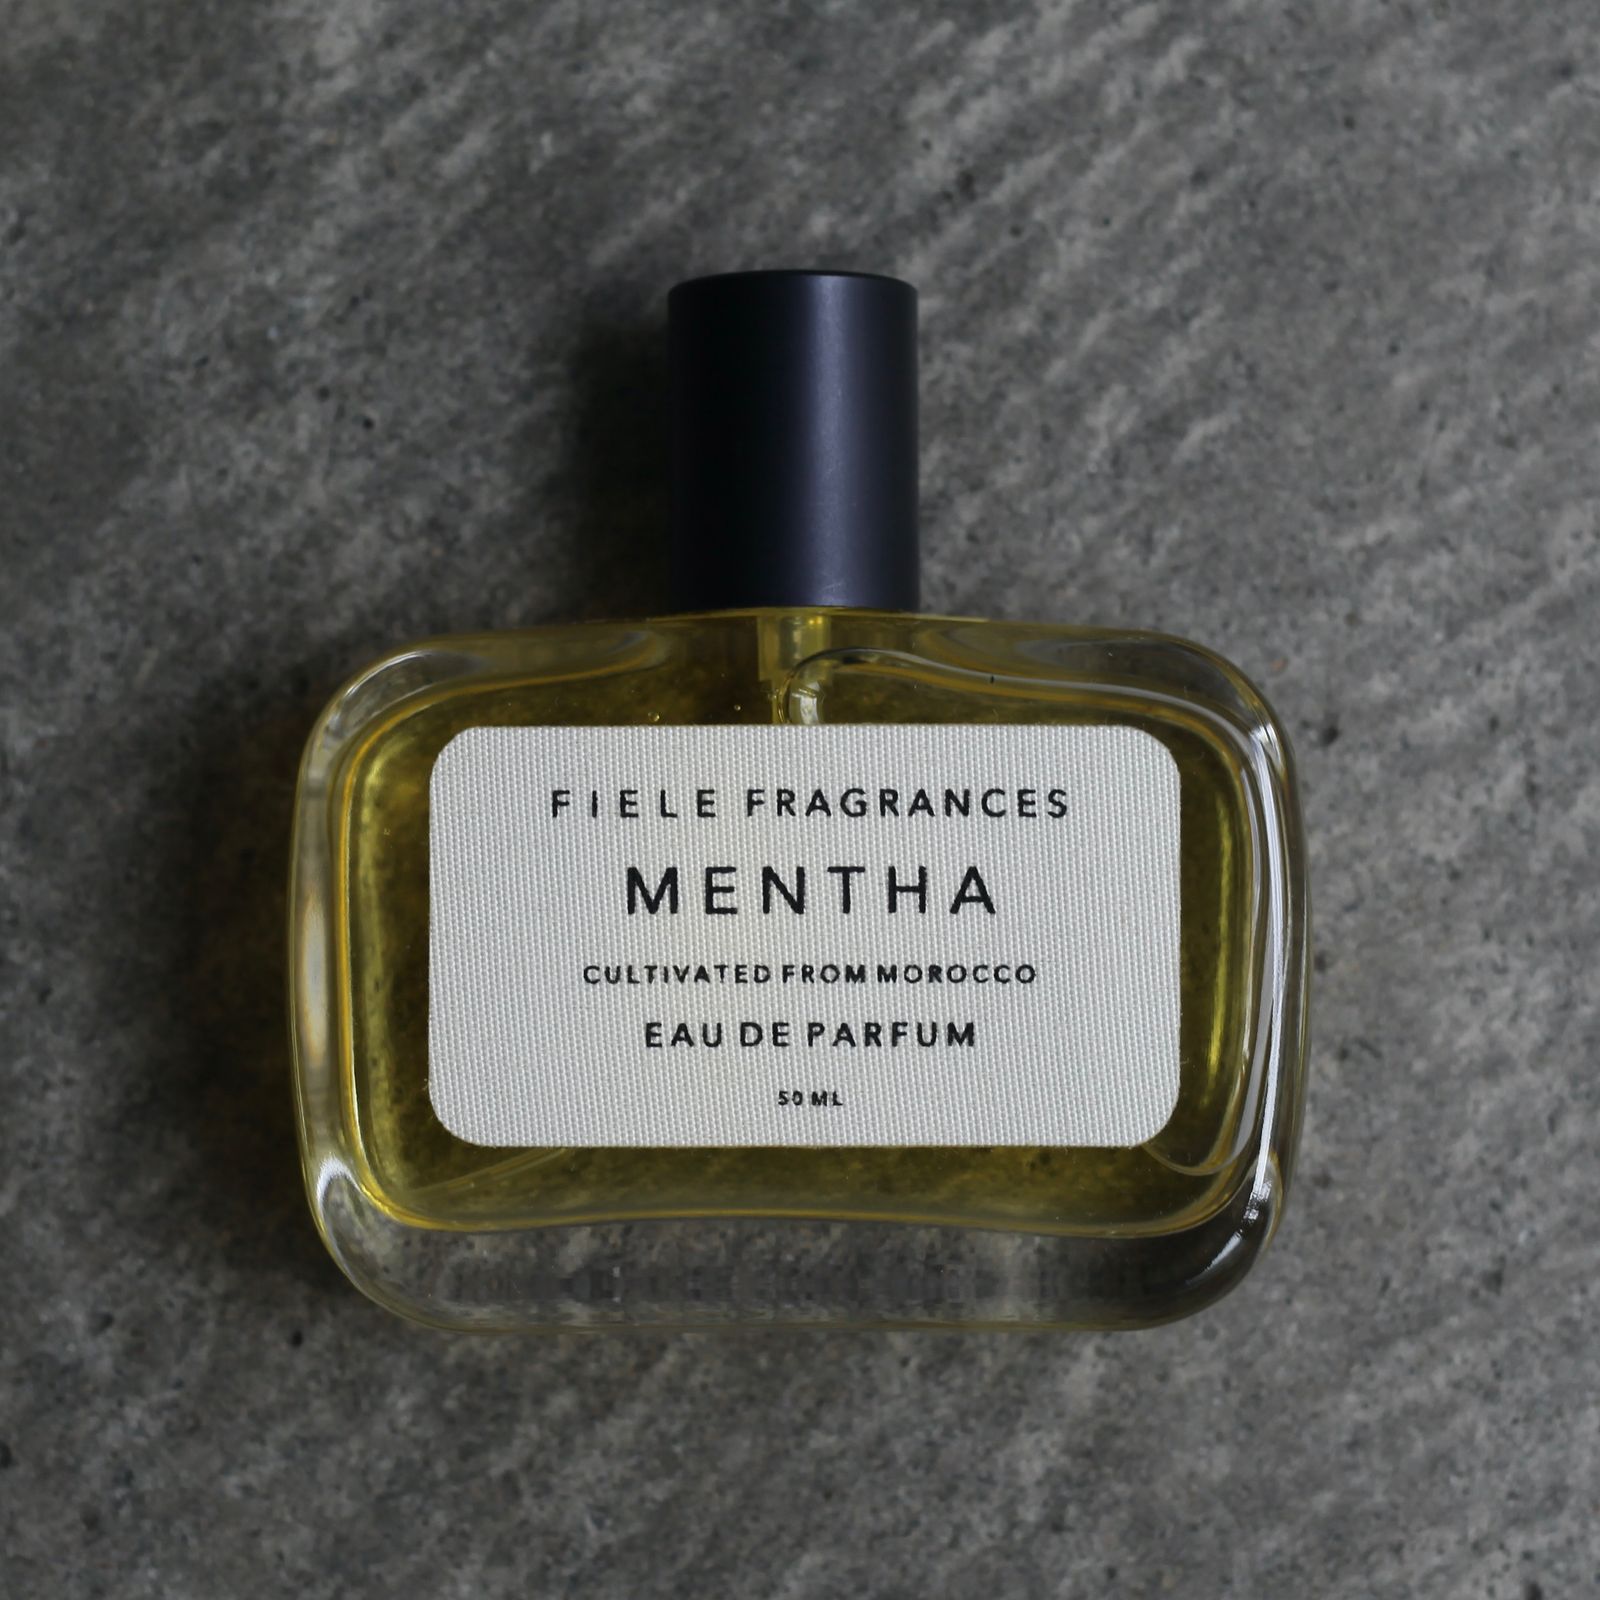 FIELE FRAGRANCES - 【再販売通知受付可能】Eau De Parfum 50ml 